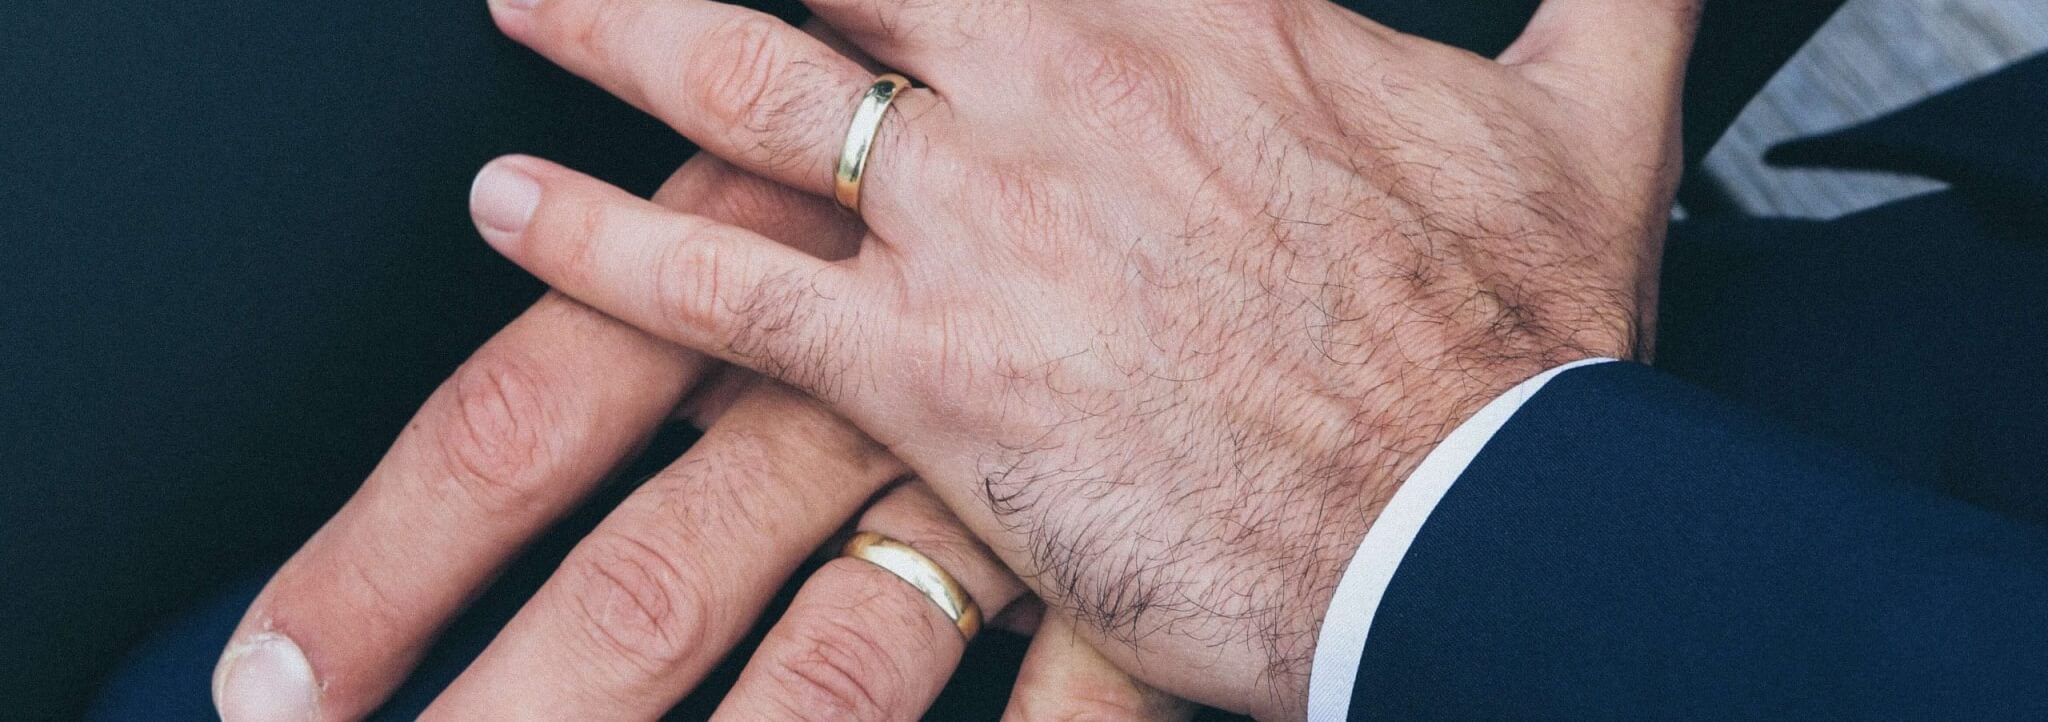 same sex marriage hands